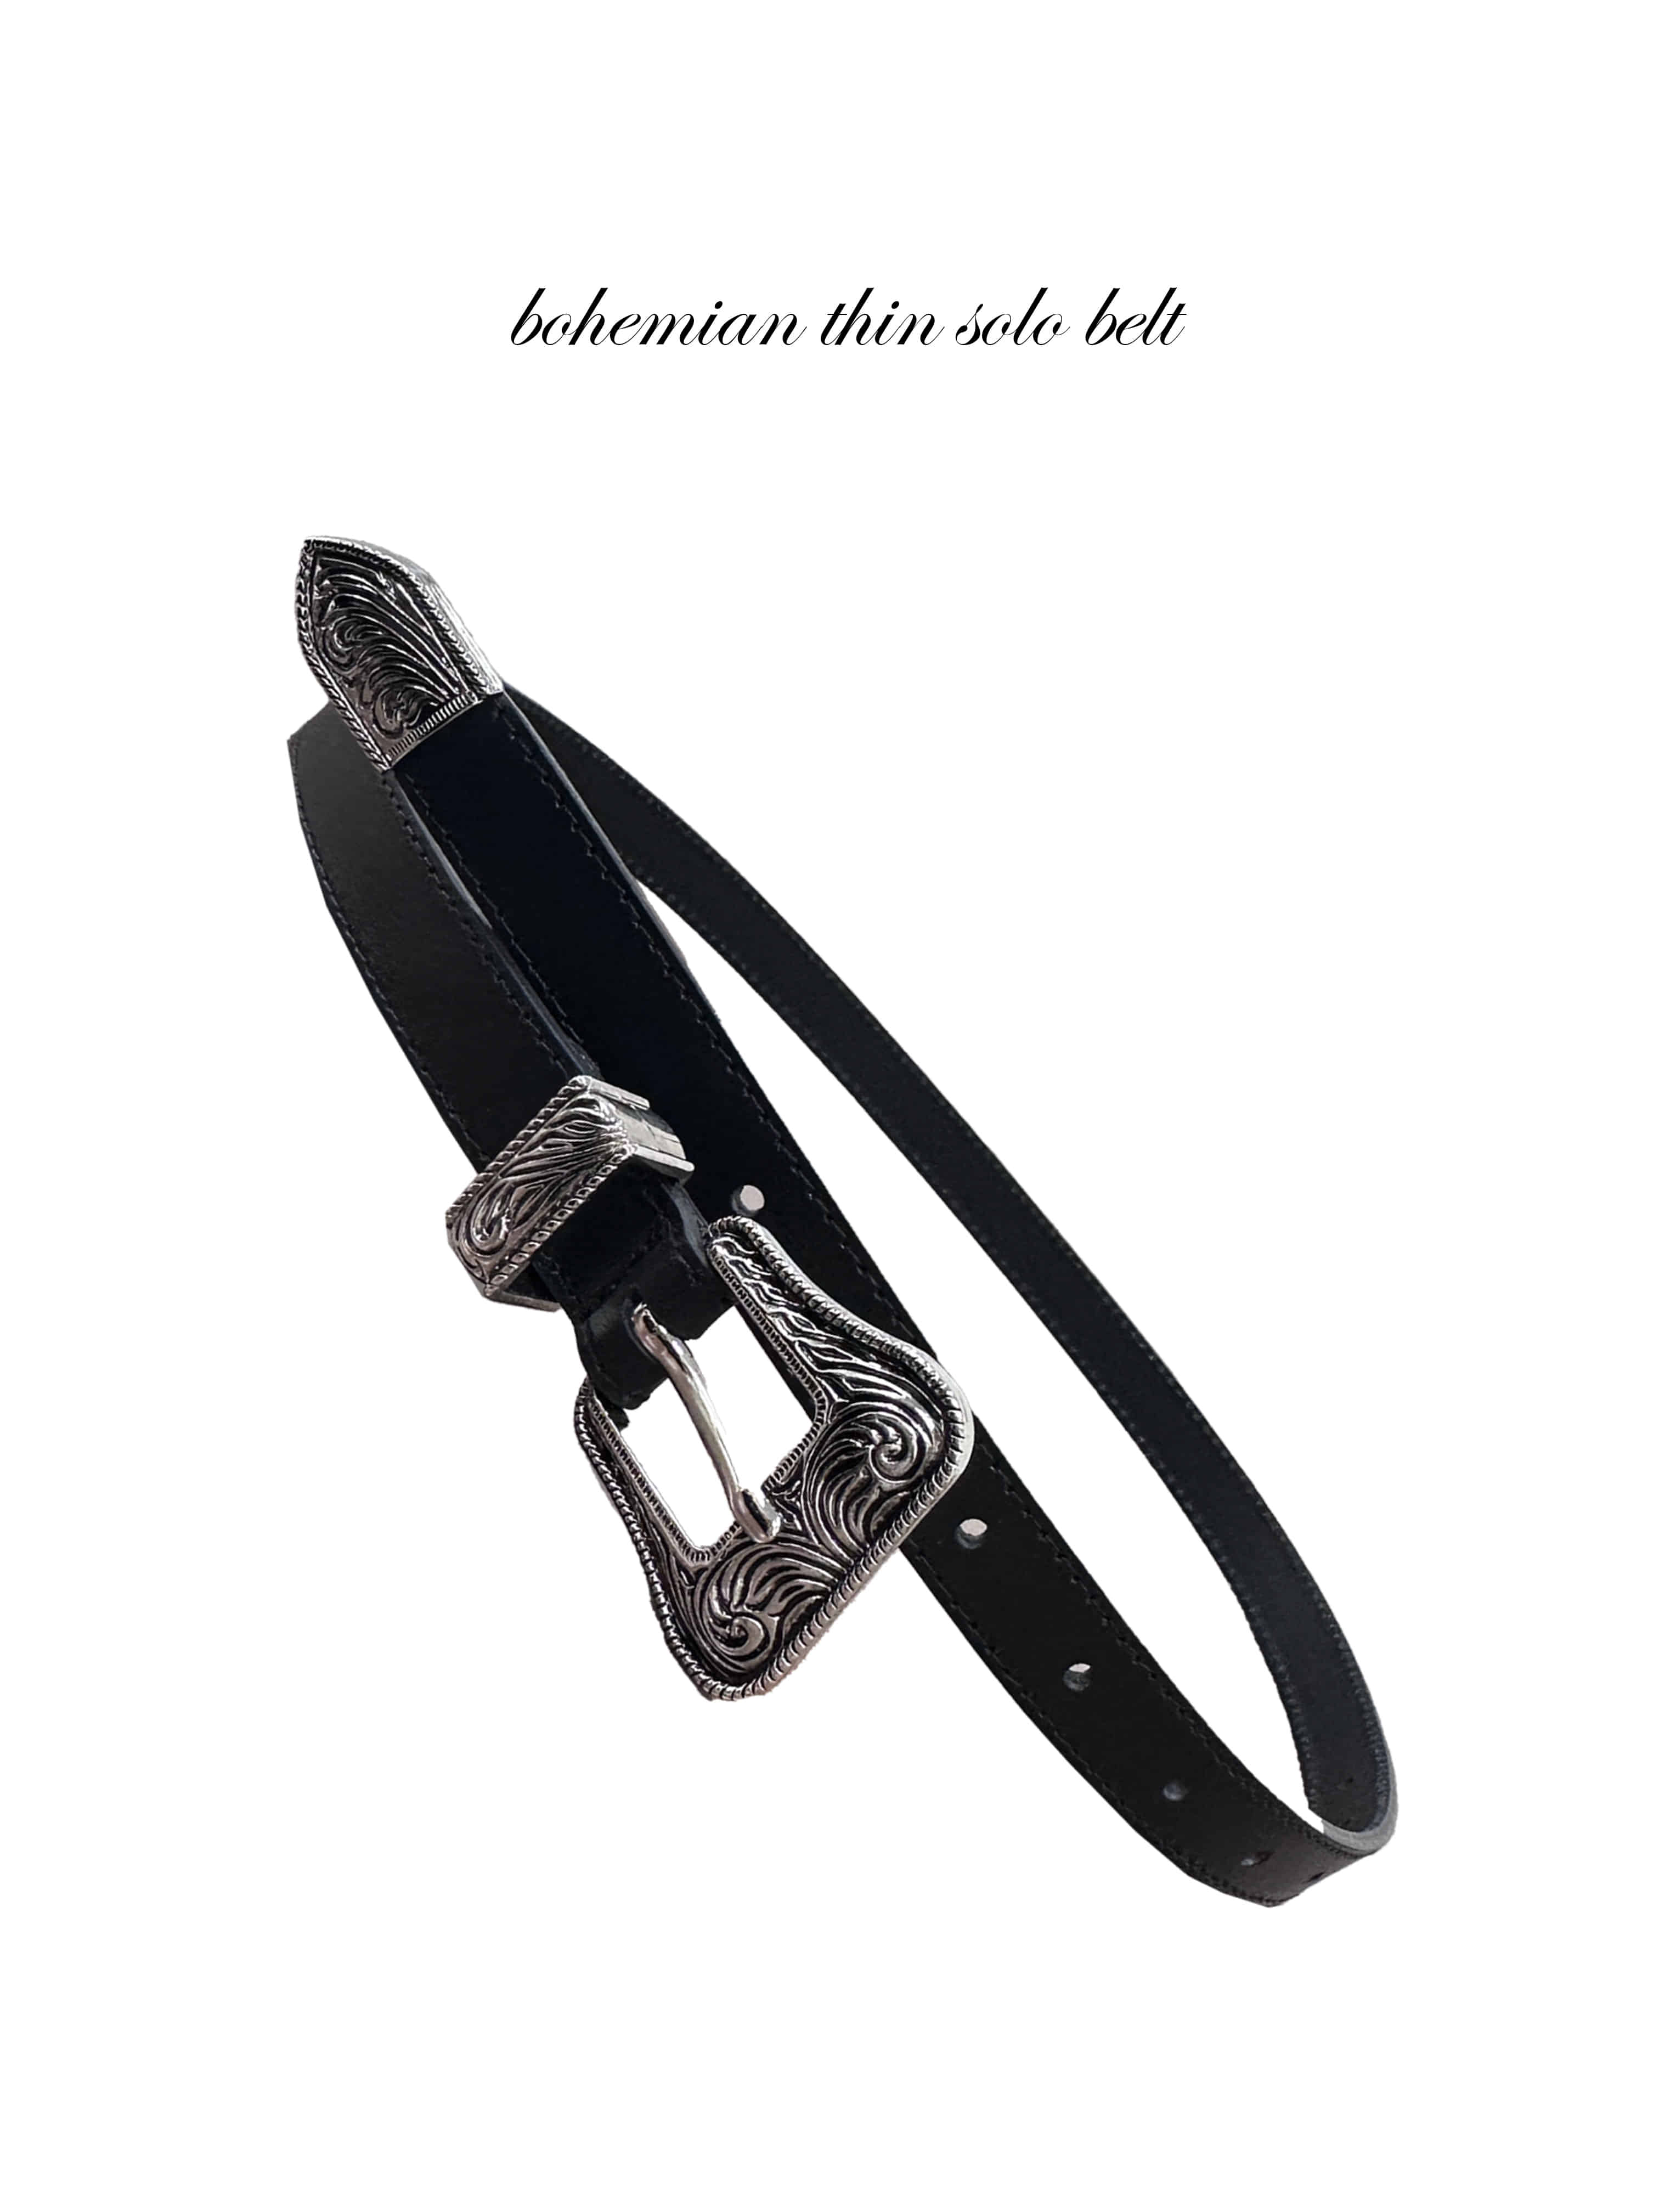 bohemian thin solo belt